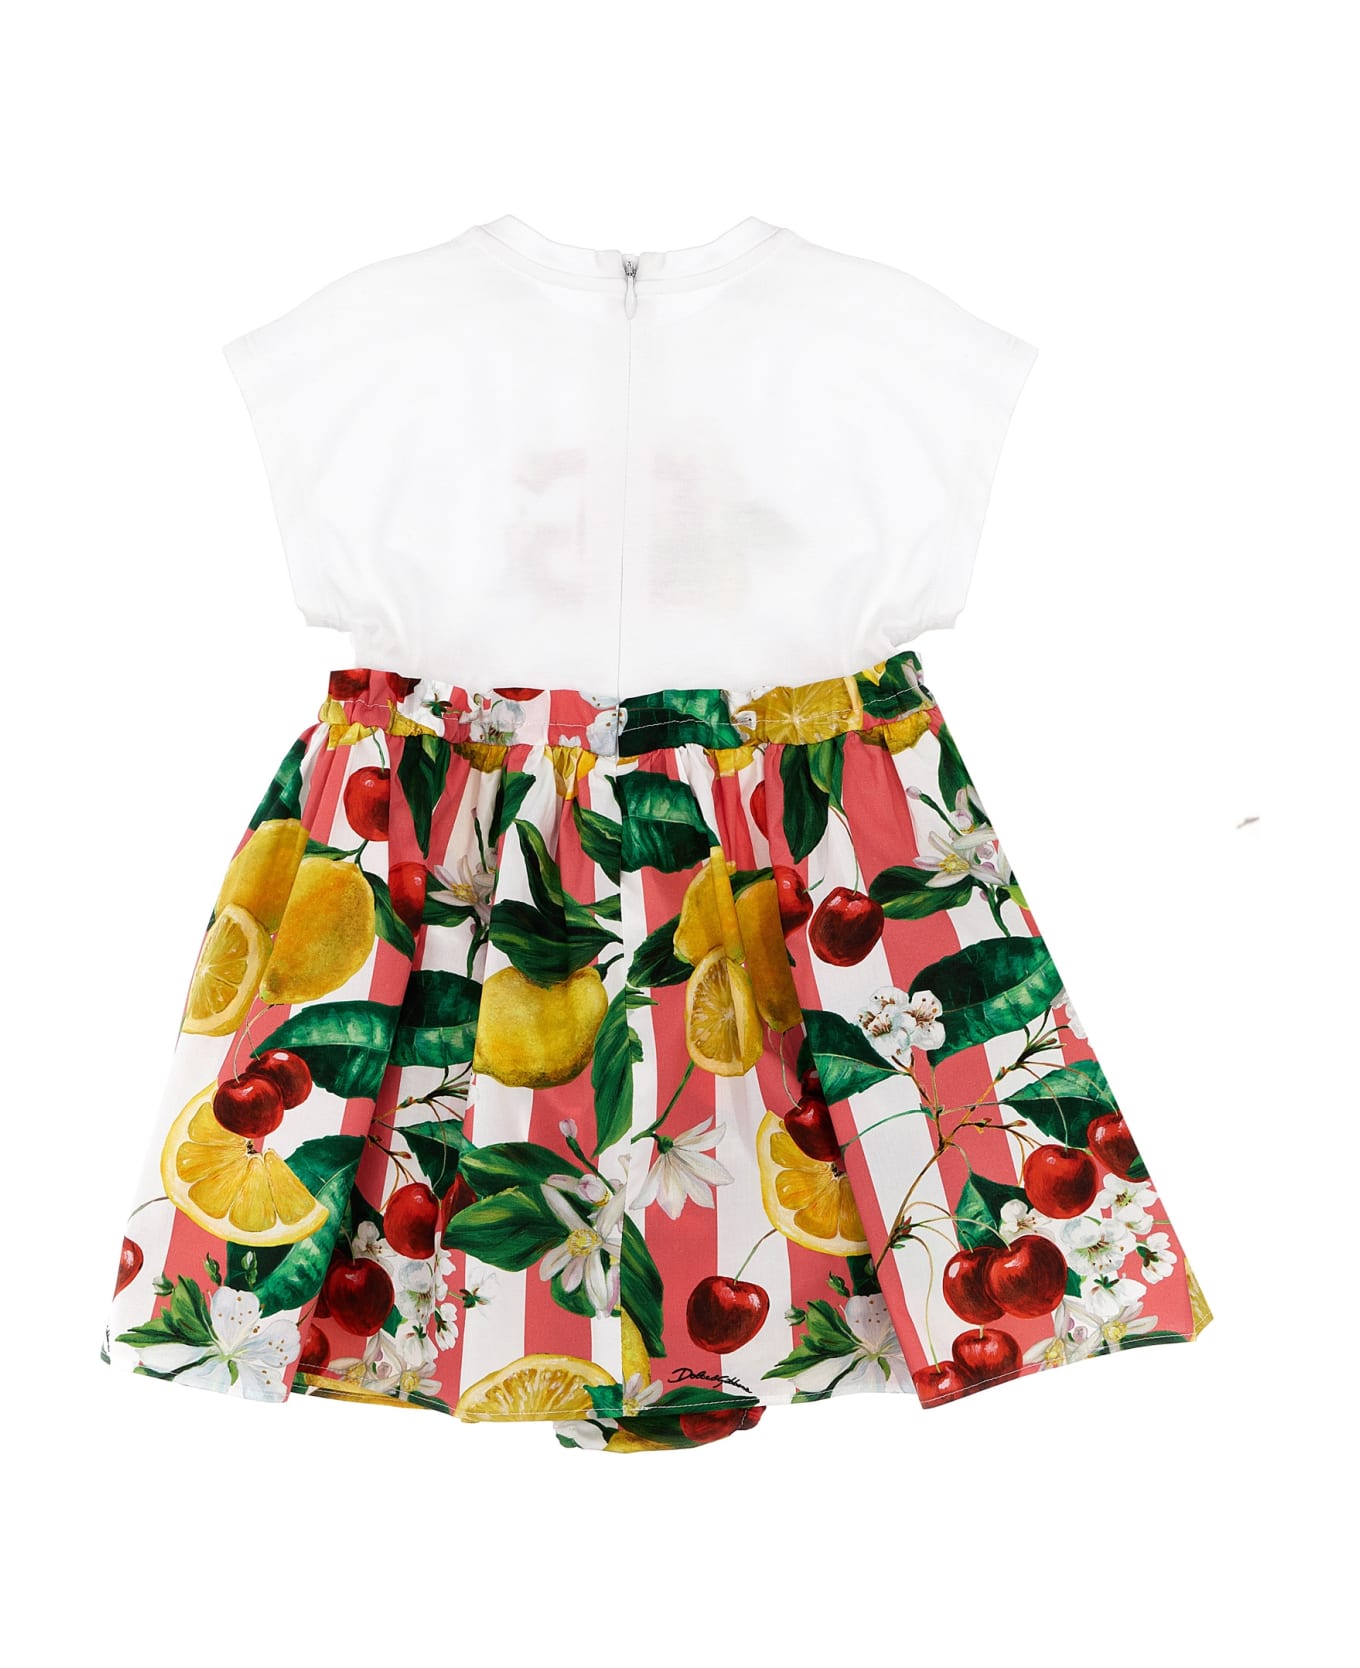 Dolce & Gabbana Fruit Print Dress - Multicolor